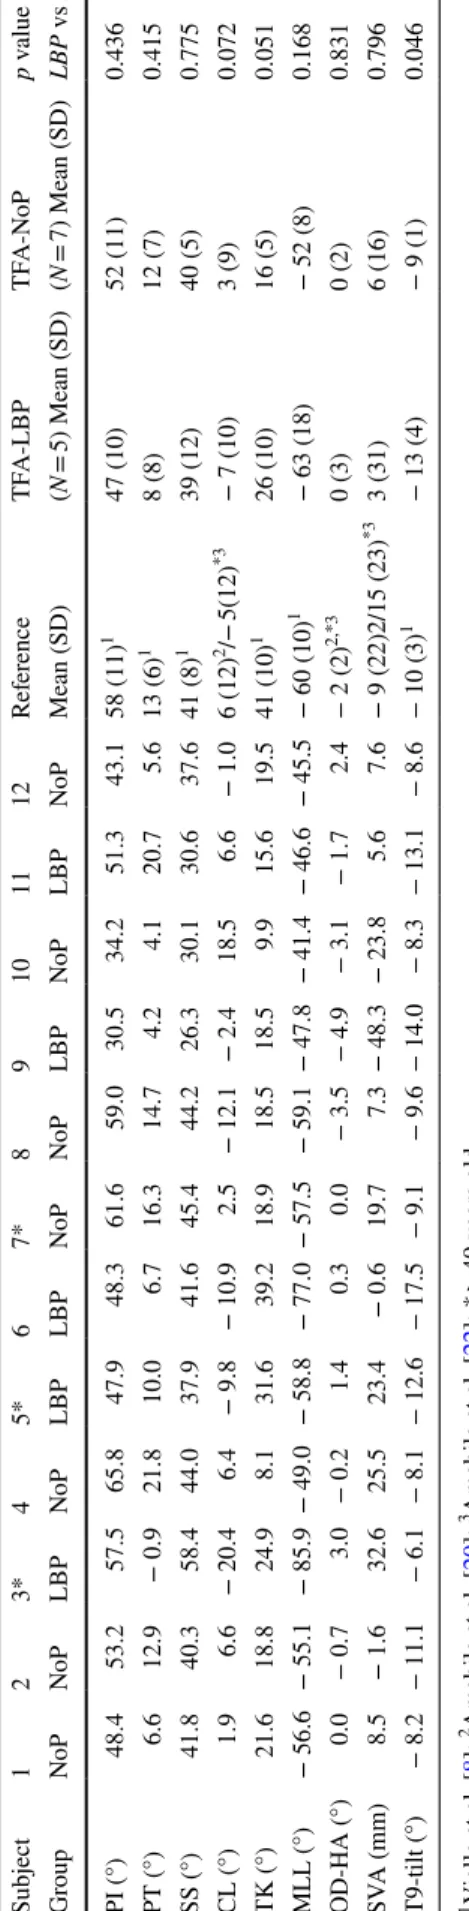 Table 2  Sagittal parameters of the sample 1  Vialle et al. [8]; 2Amabile et al. [20]; 3Amabile et al